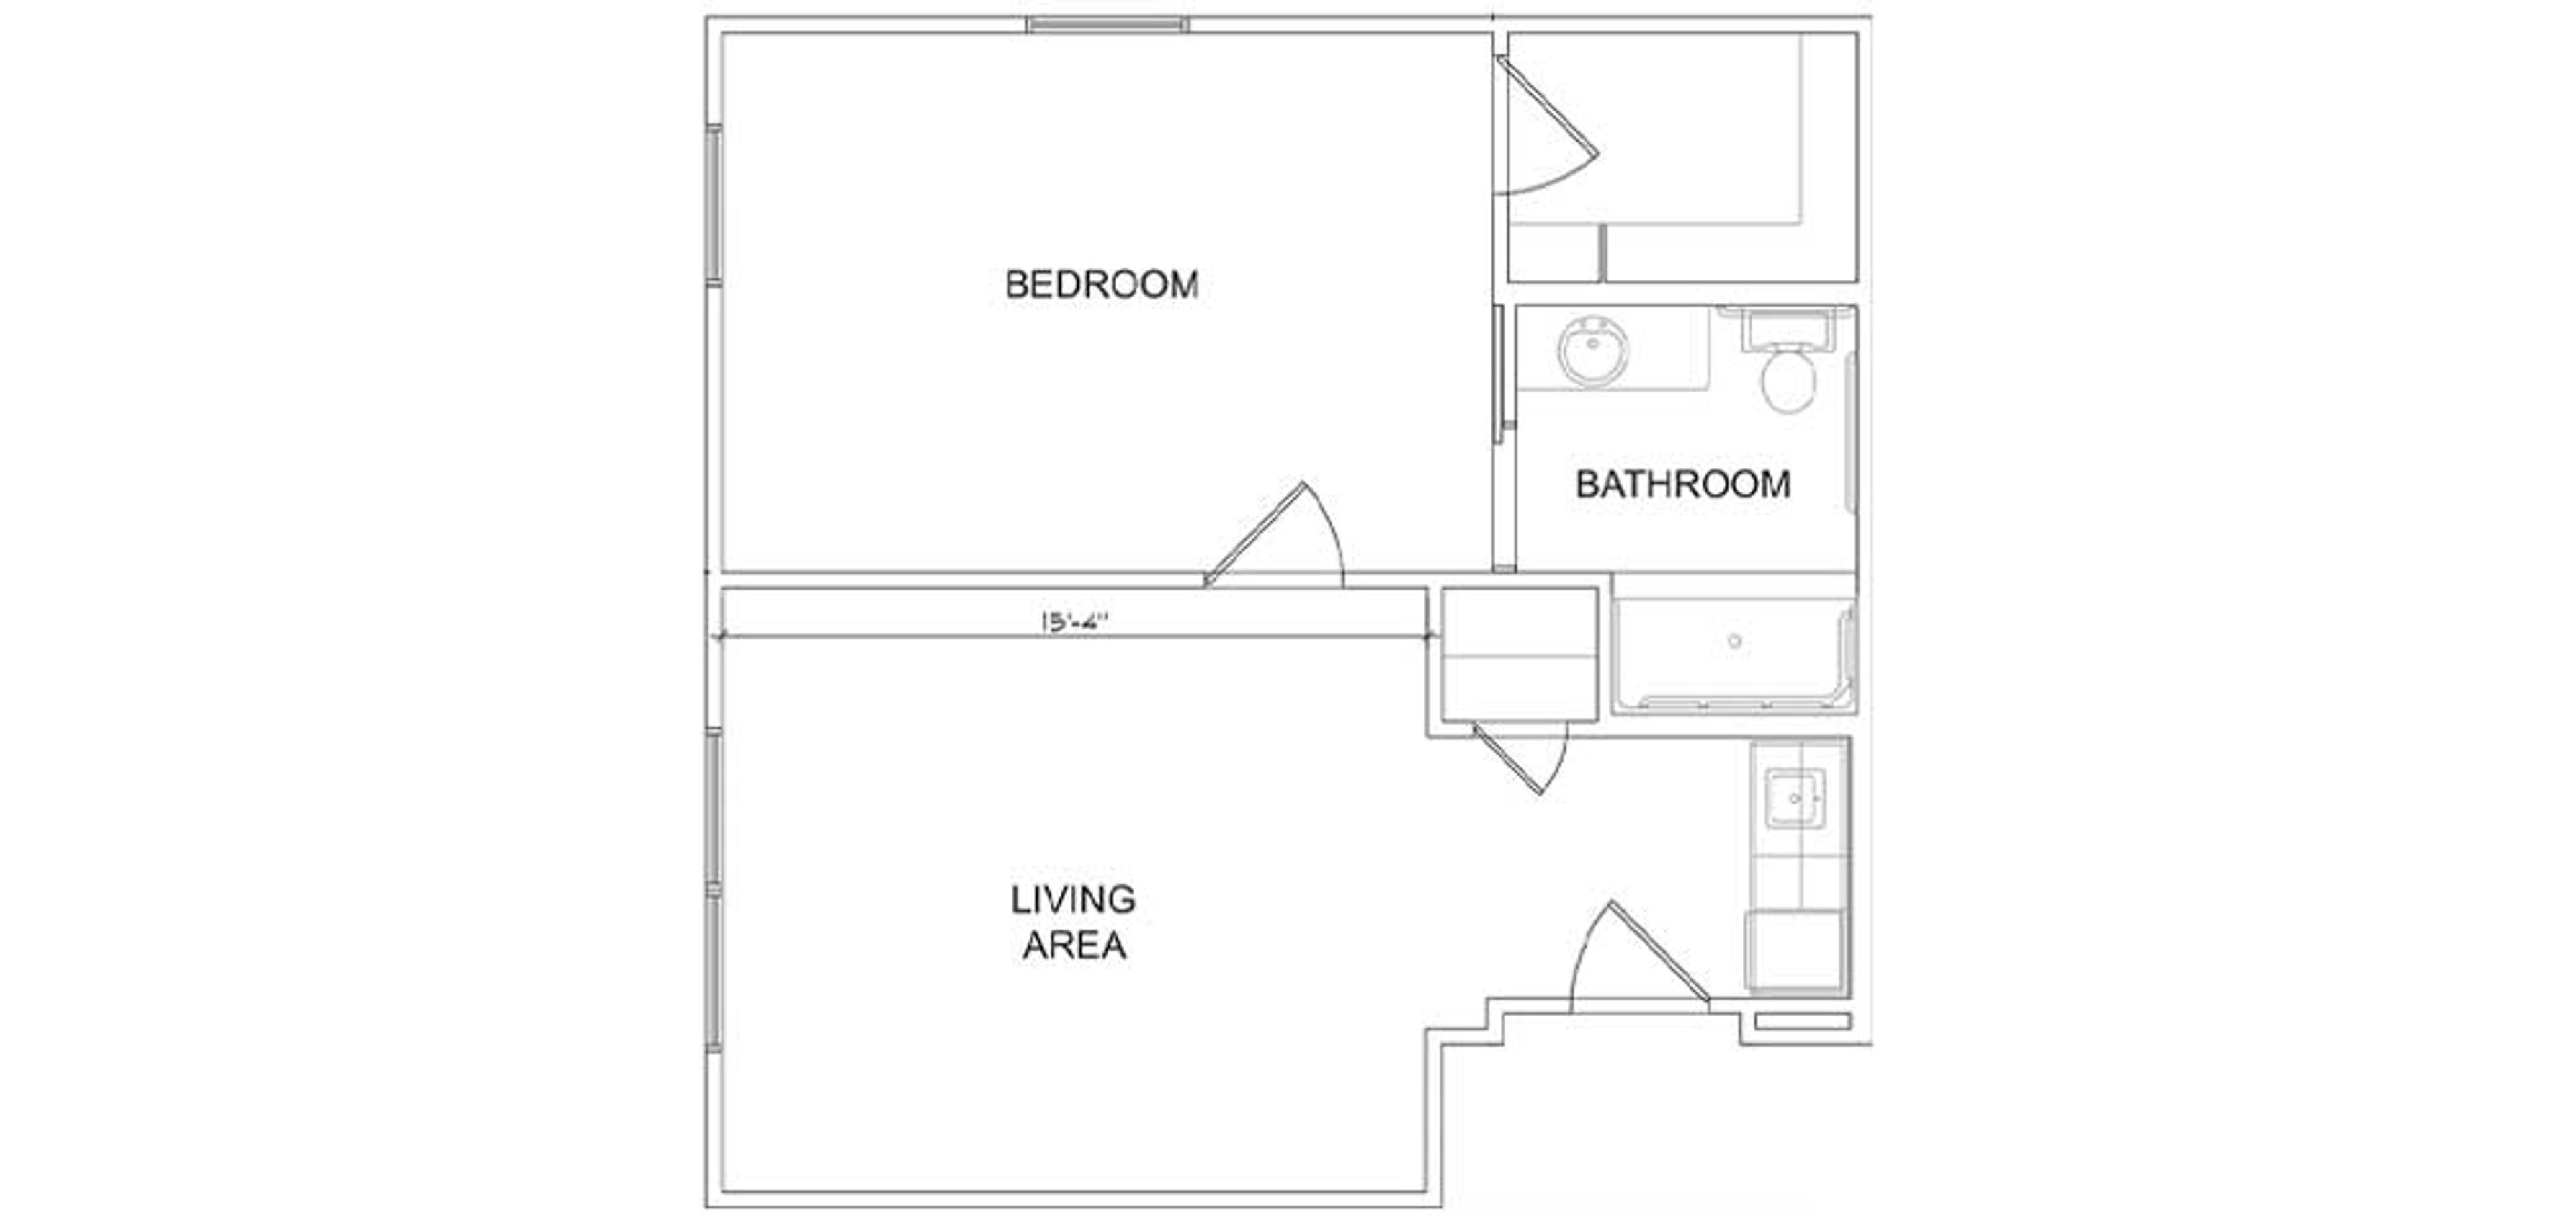 Floorplan - Martin Crest - 1B 1B Luxury Assisted Living 